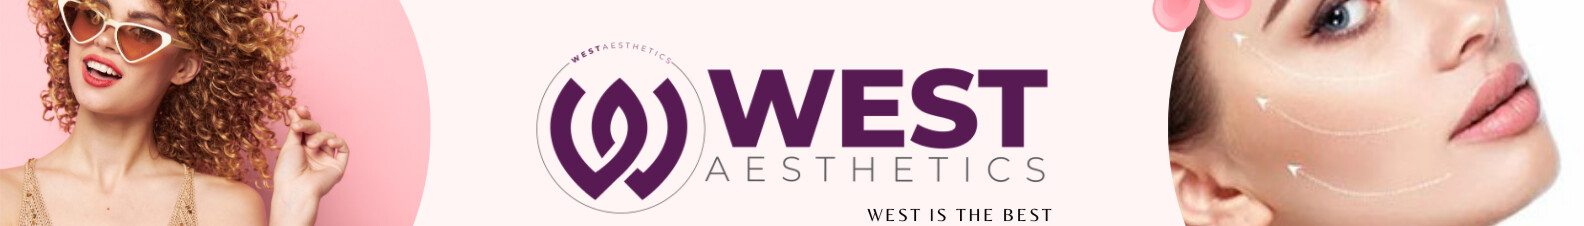 West Aesthetics - Cover Photo